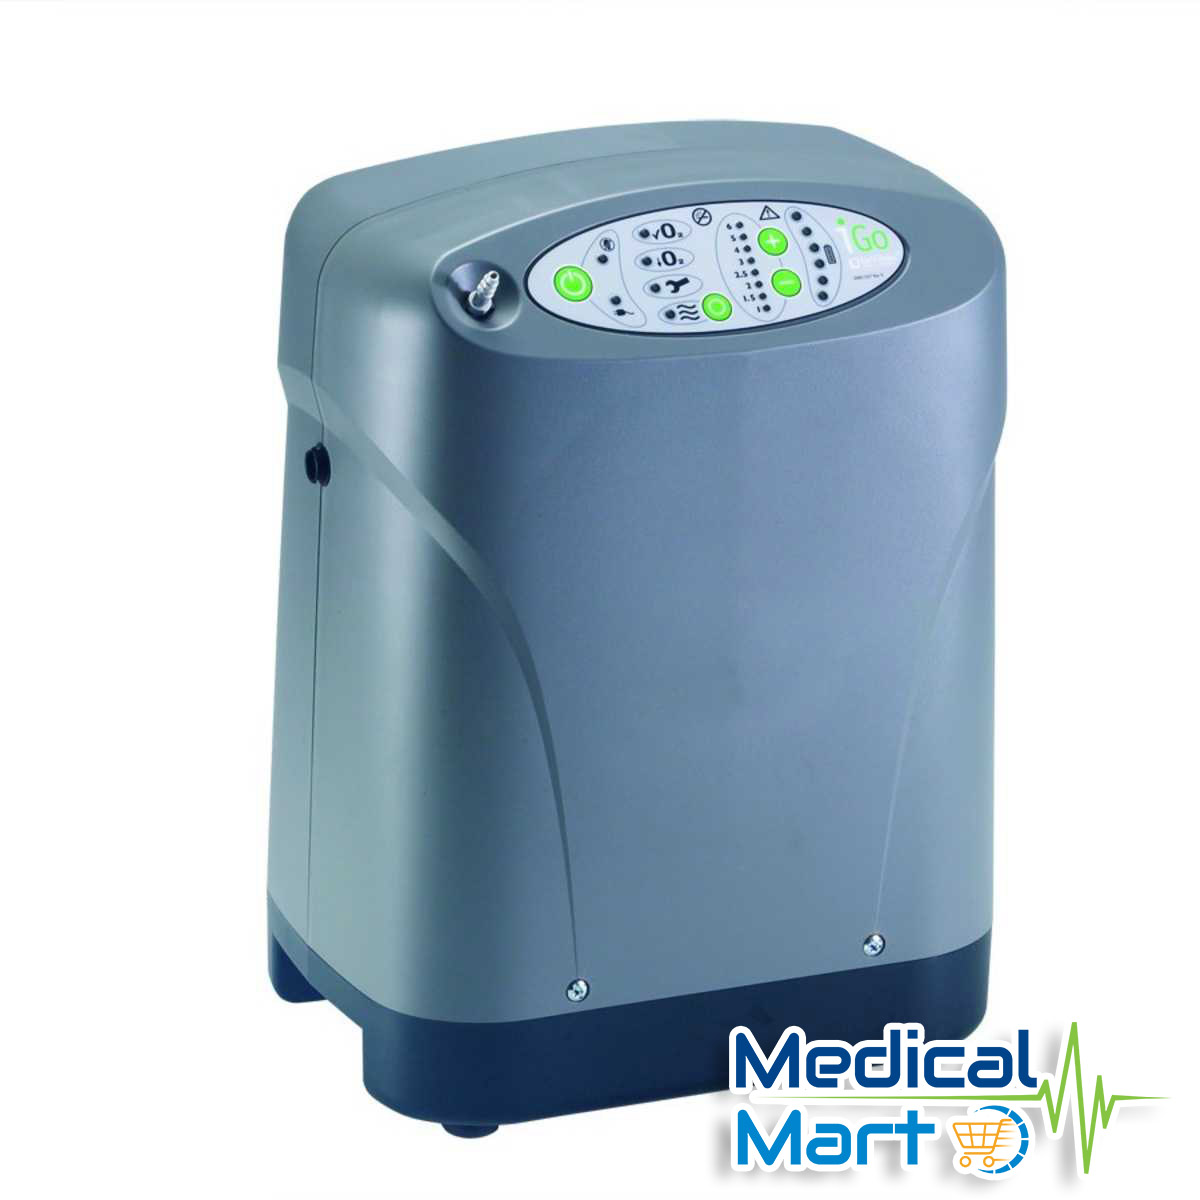 Igo Portable Oxygen Concentrator